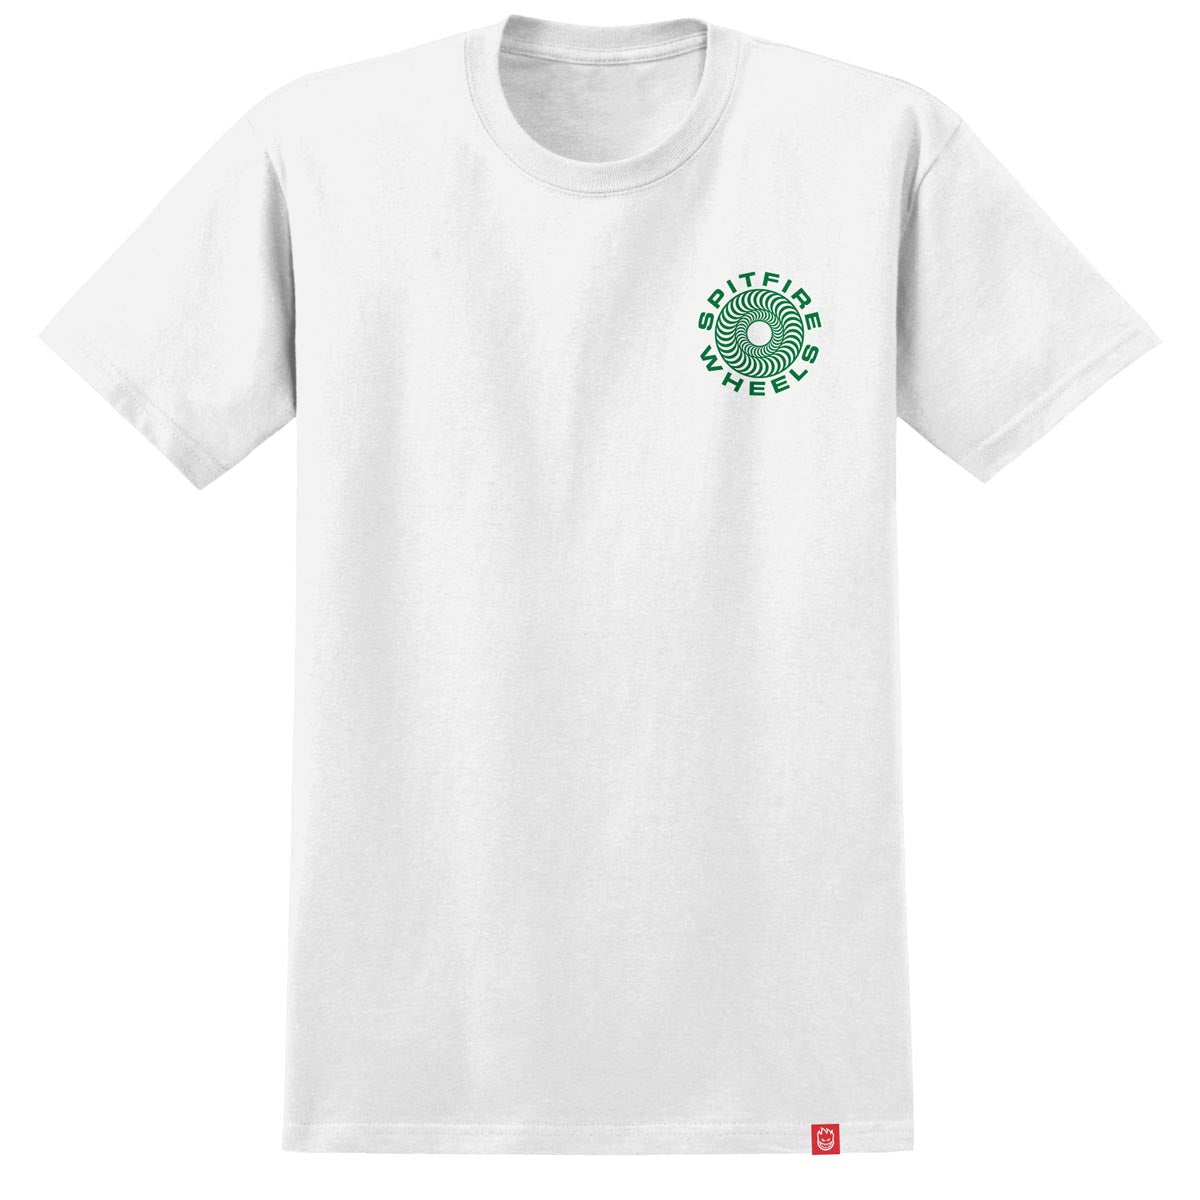 Spitfire Classic '87 Swirl Fill T-Shirt - White/Green/Black image 2